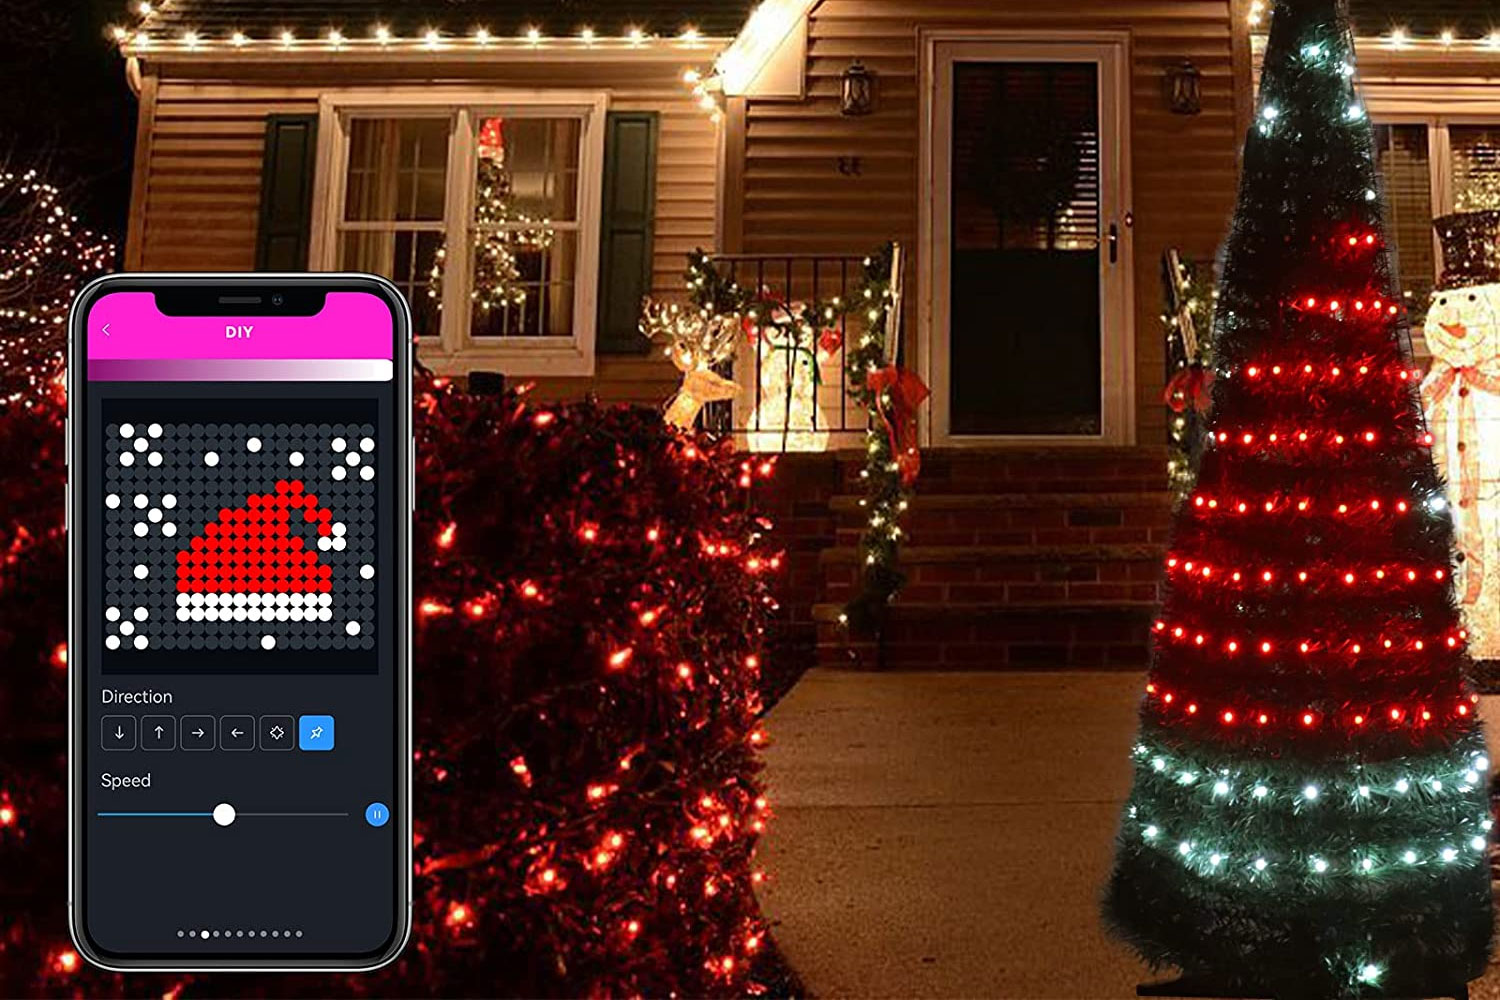 Freecube smart Christmas Tree being programmed via smartphone in front yard. 